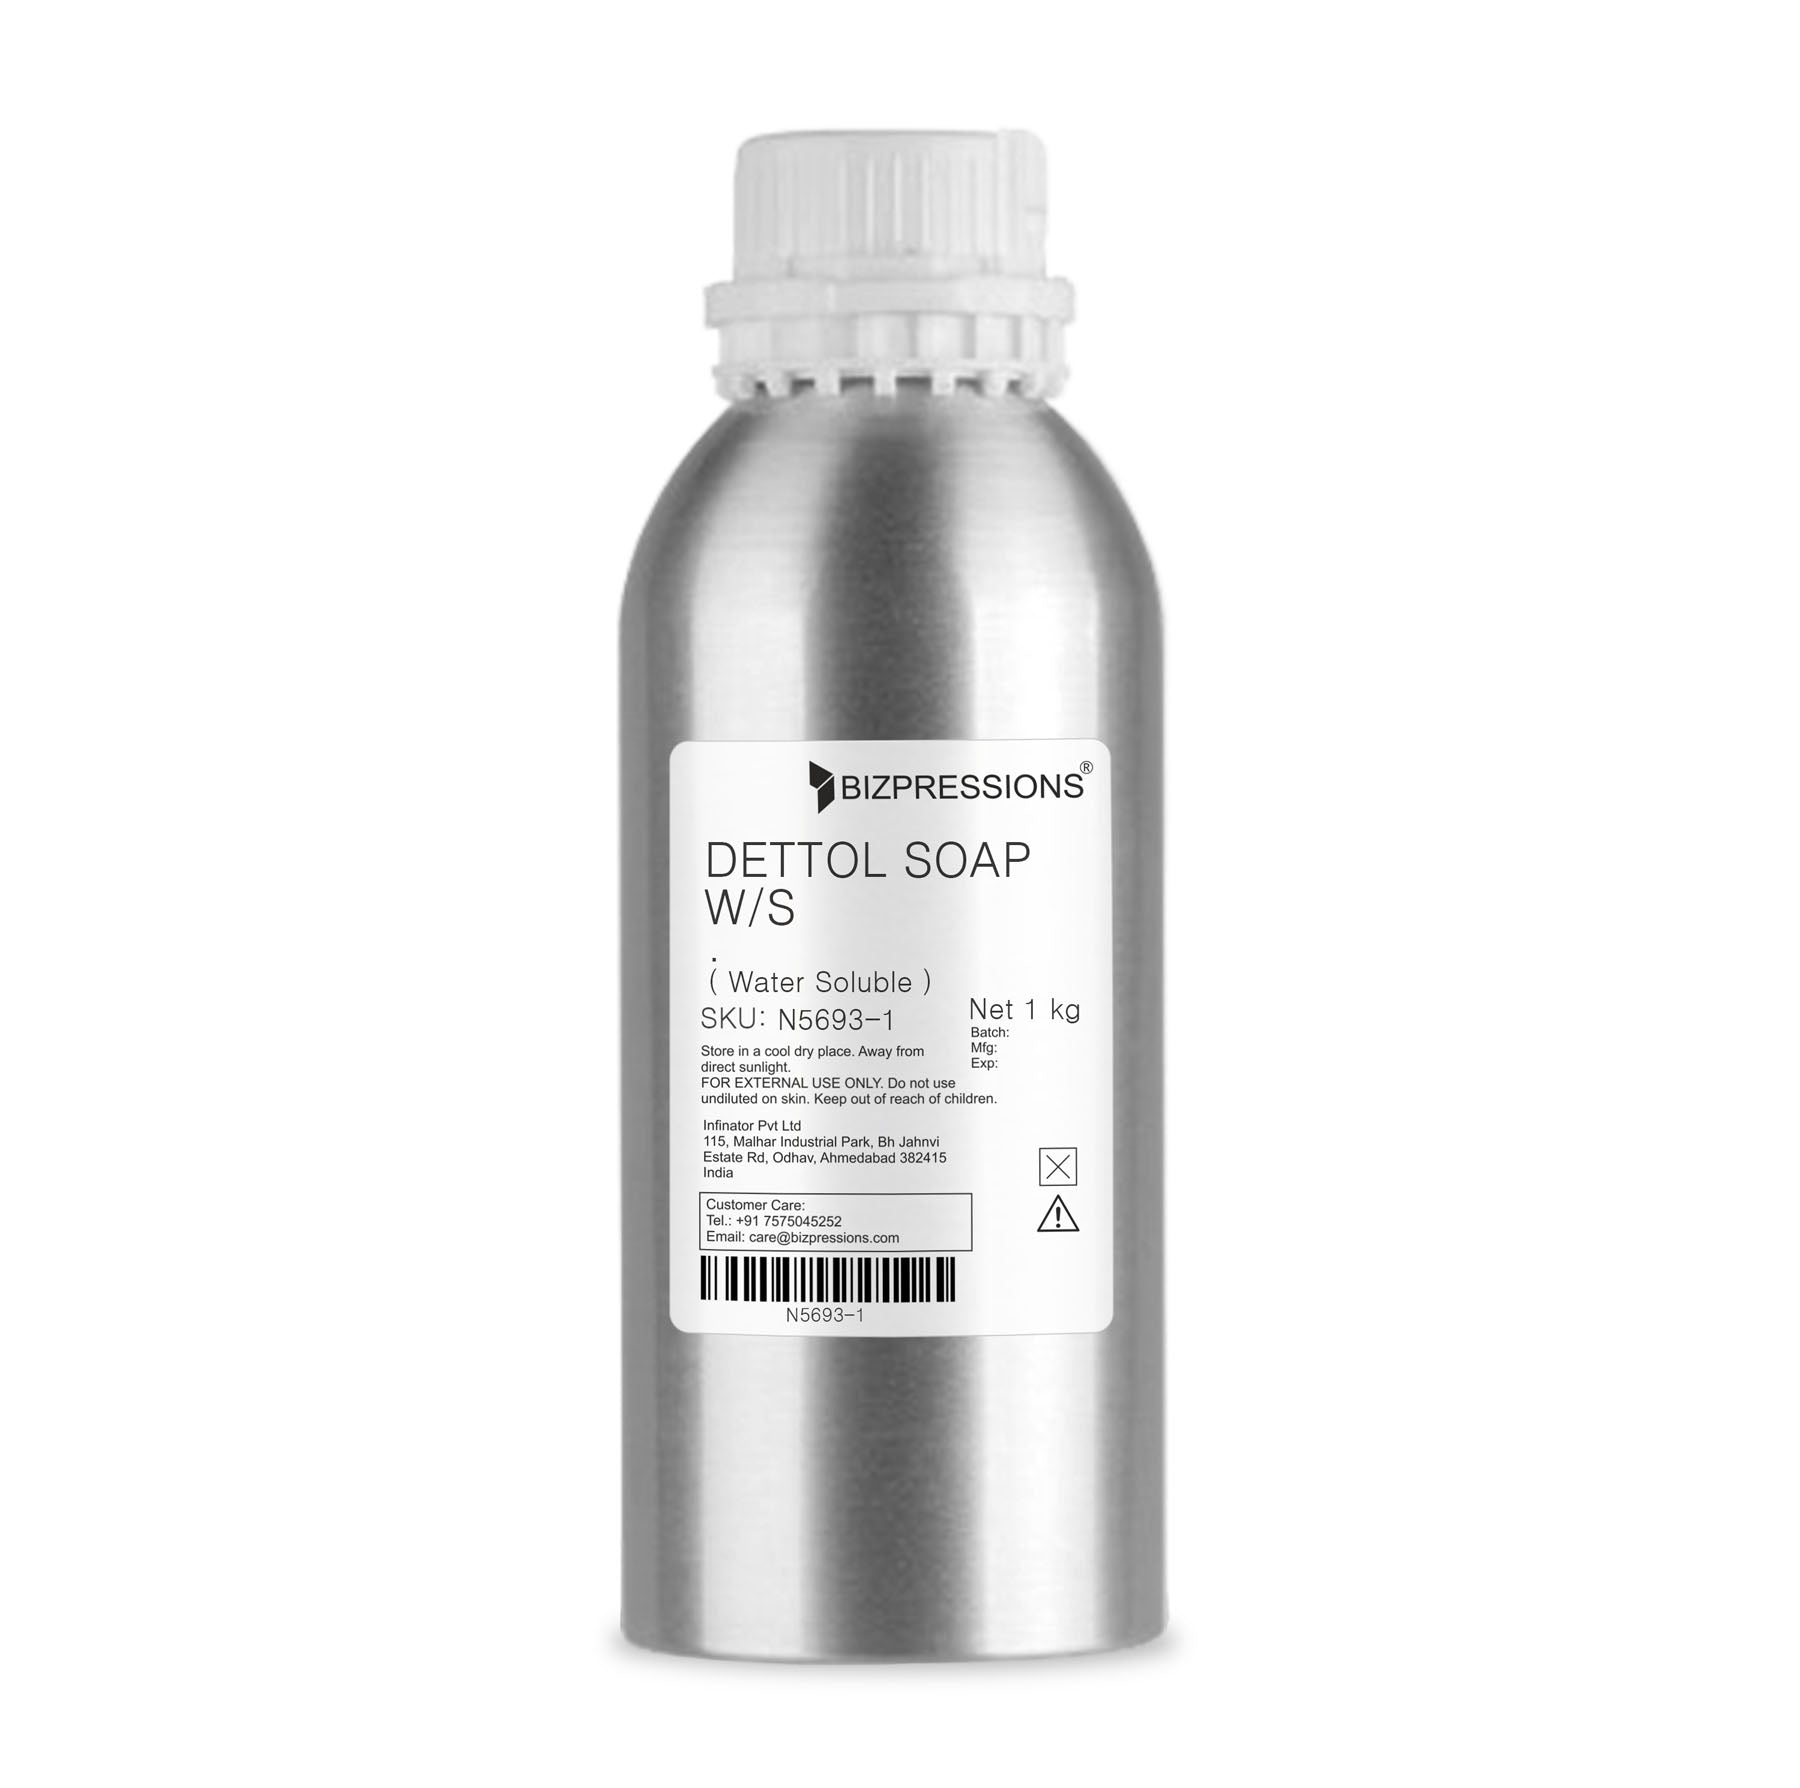 DETTOL SOAP W/S - Fragrance ( Water Soluble ) - 1 kg